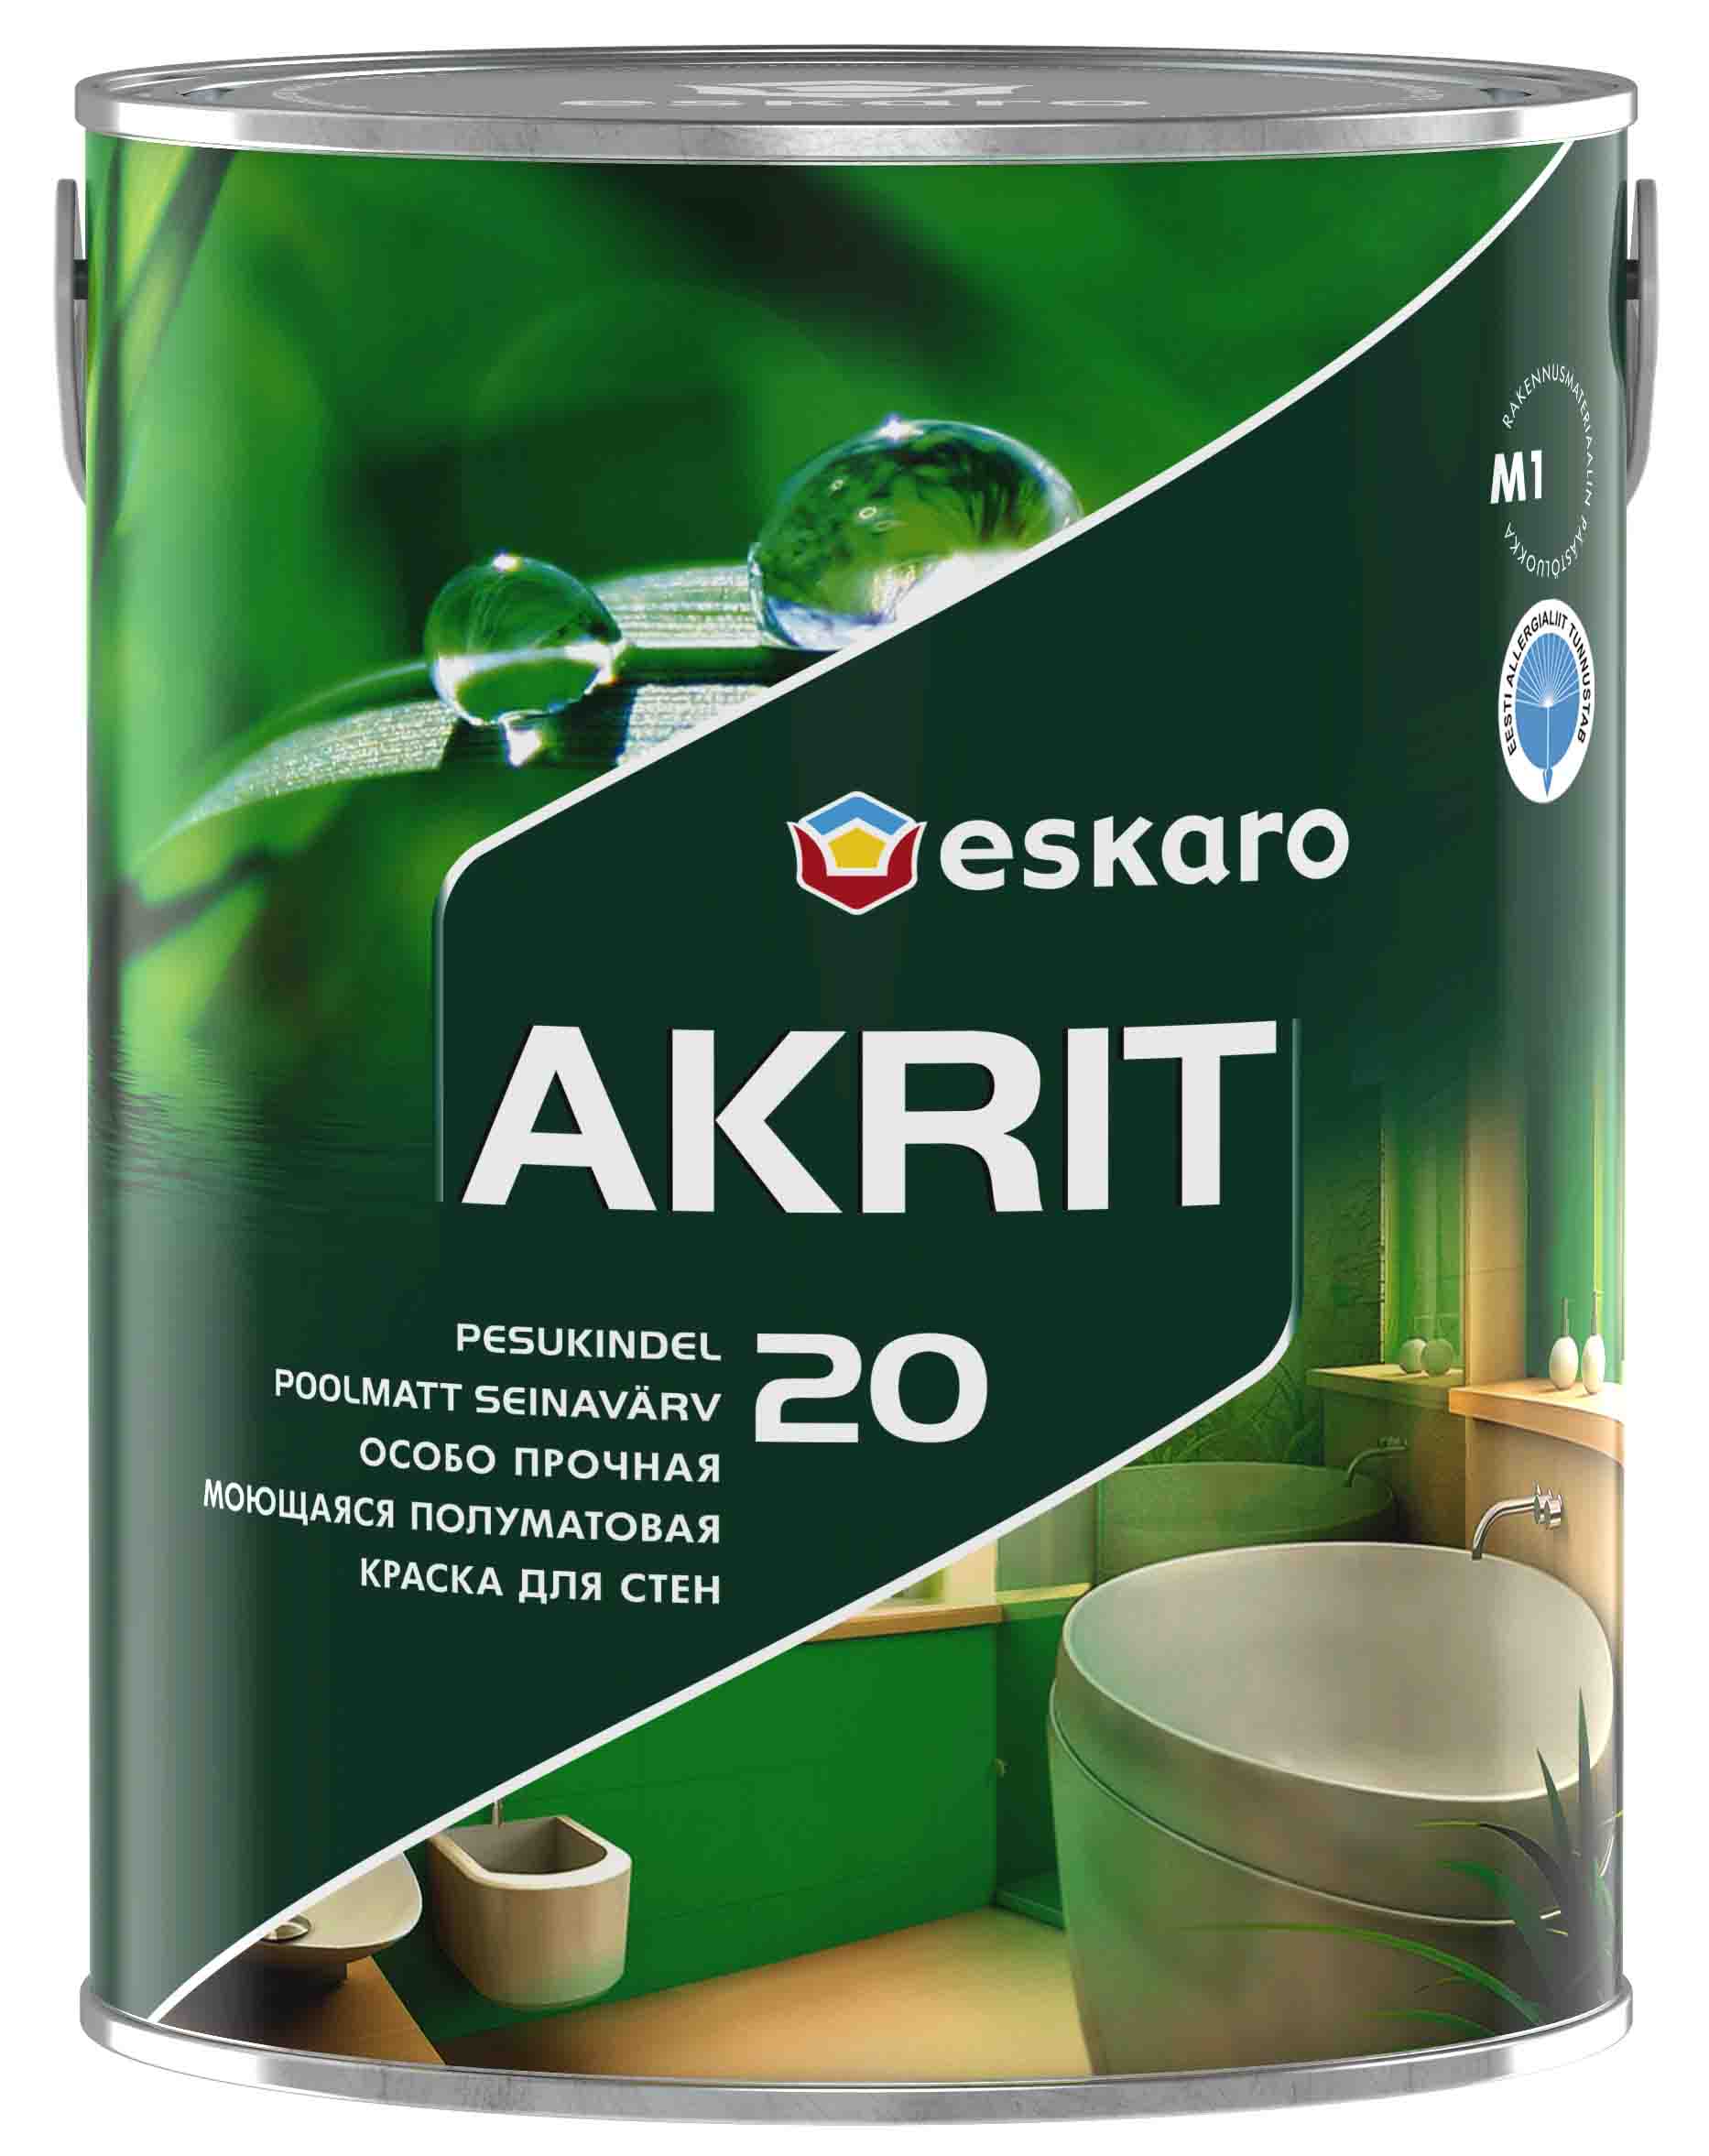 Особо прочная моющаяся полуматовая краска для стен Eskaro Akrit 20 (База А - белая) 2,85 л								